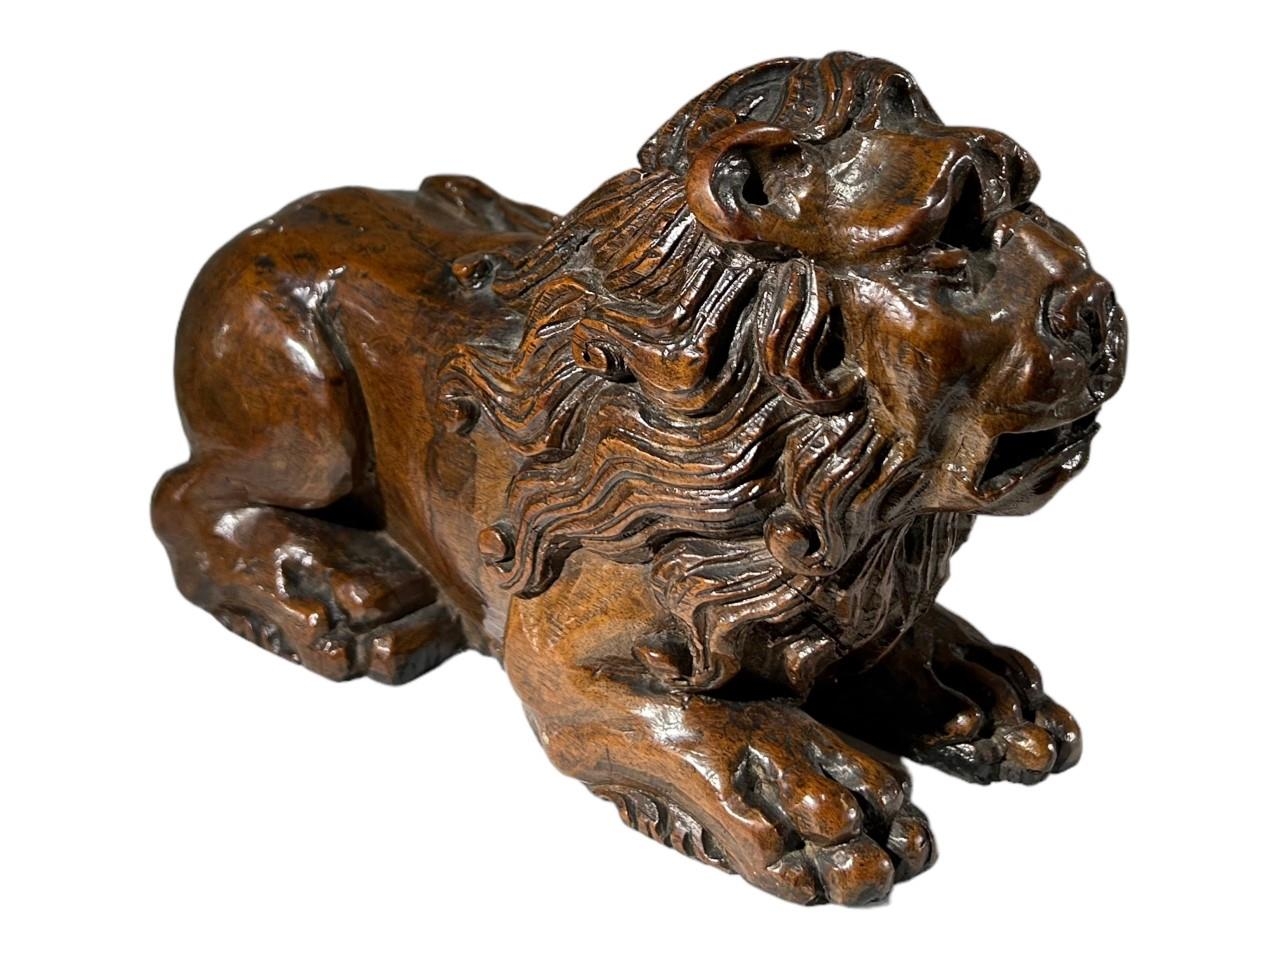 AN ITALIAN 18TH/19TH CENTURY (POSSIBLY WALNUT) CARVED WOOD FIGURE OF A LION. (h 12.5cm x w 20cm x